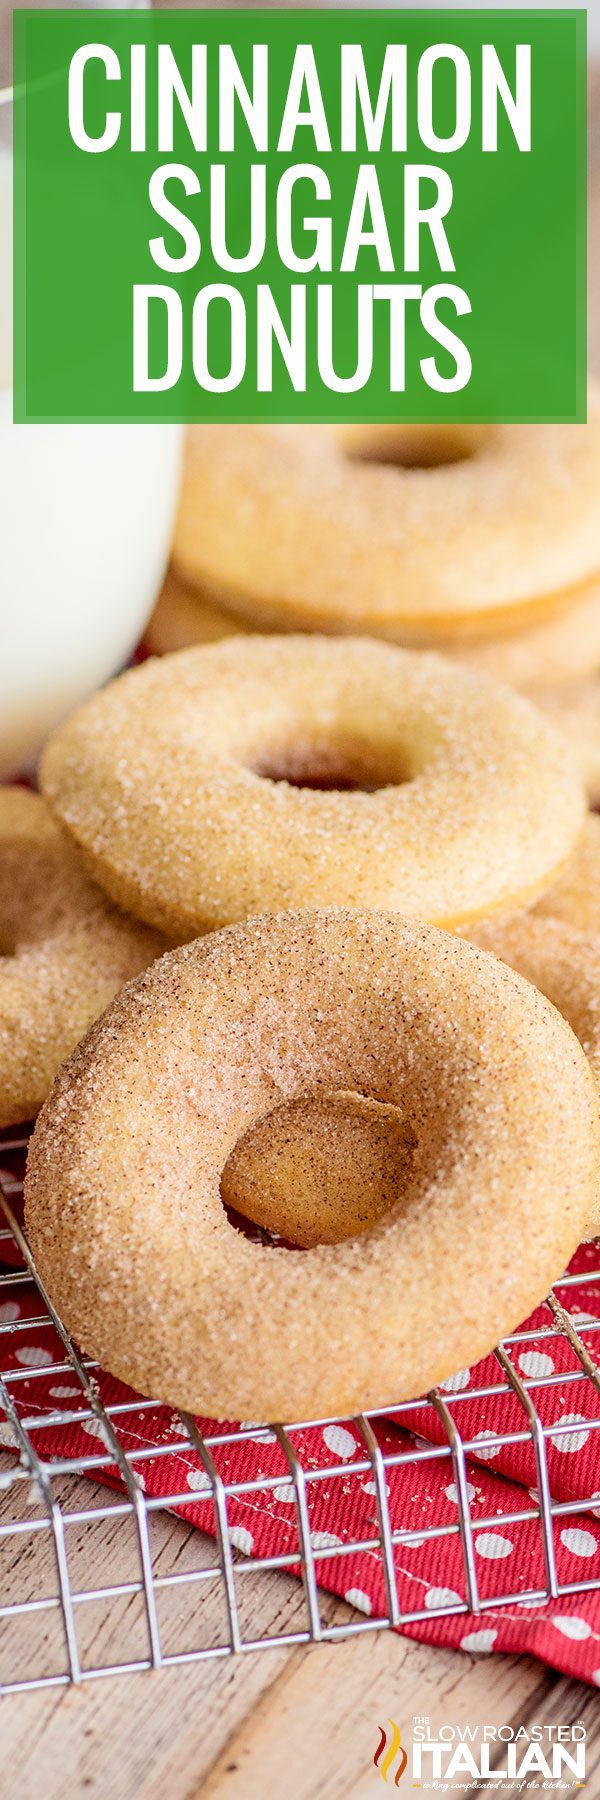 cinnamon sugar donuts closeup